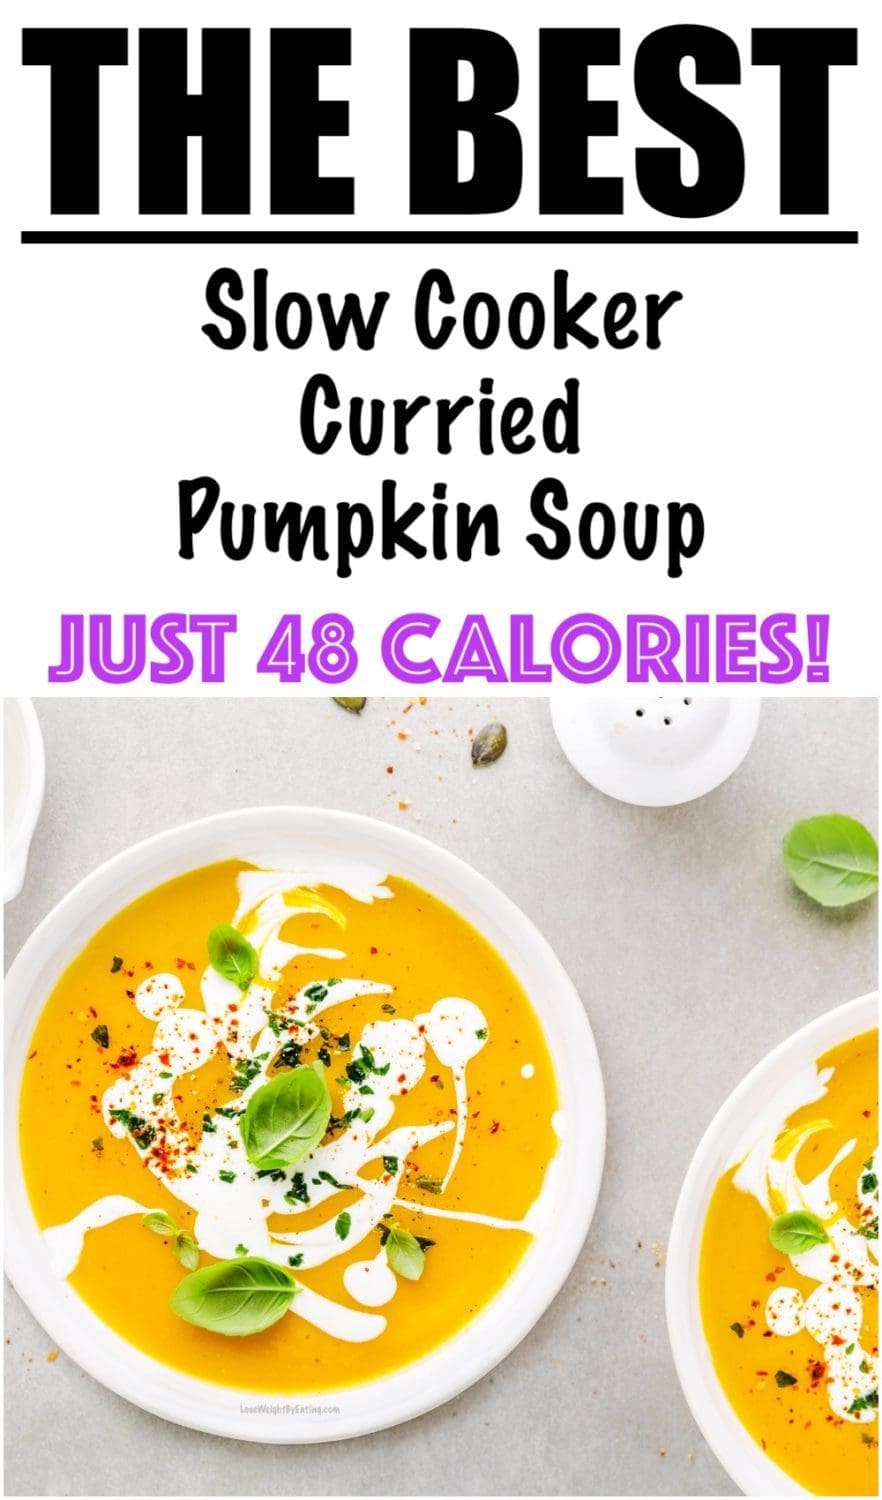 Curried Pumpkin Soup Slow Cooker Recipe